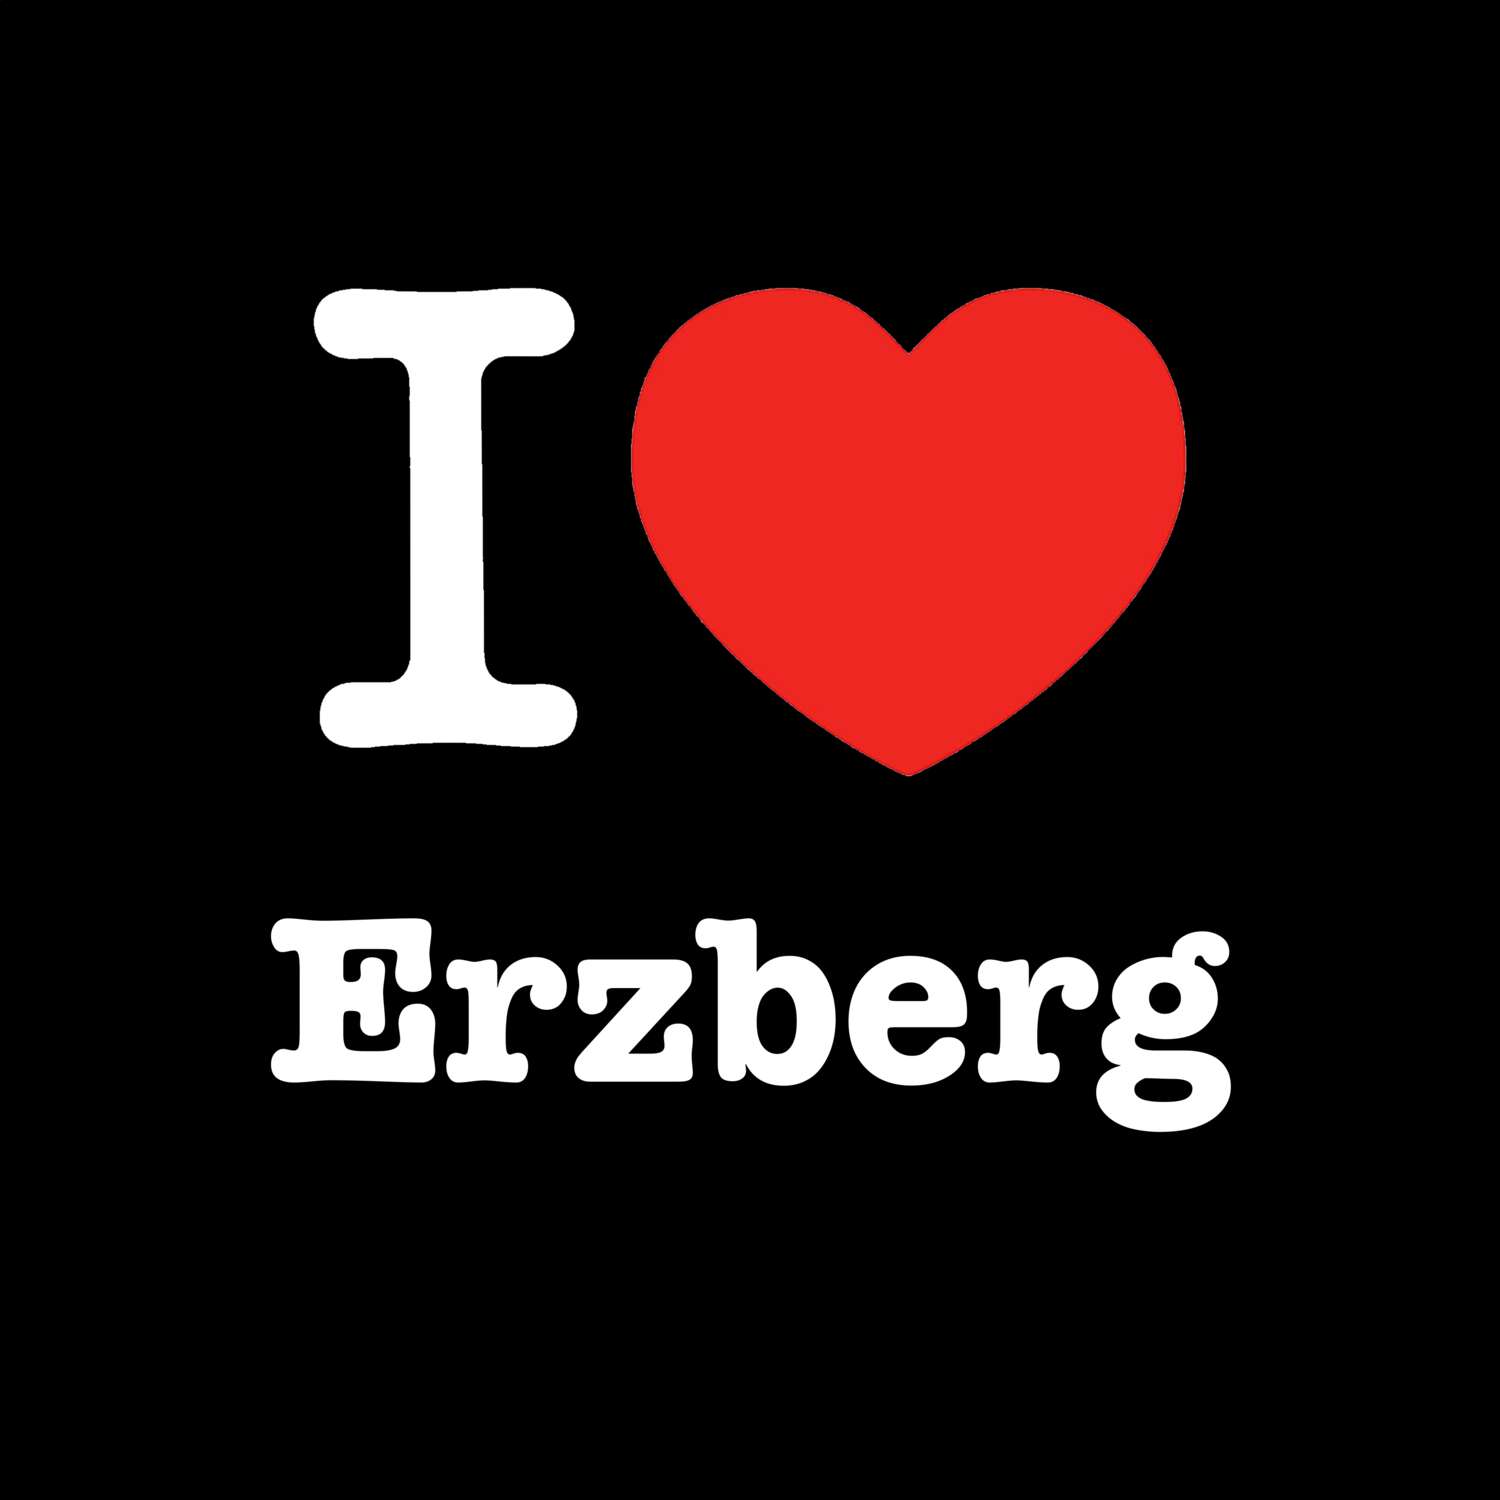 Erzberg T-Shirt »I love«